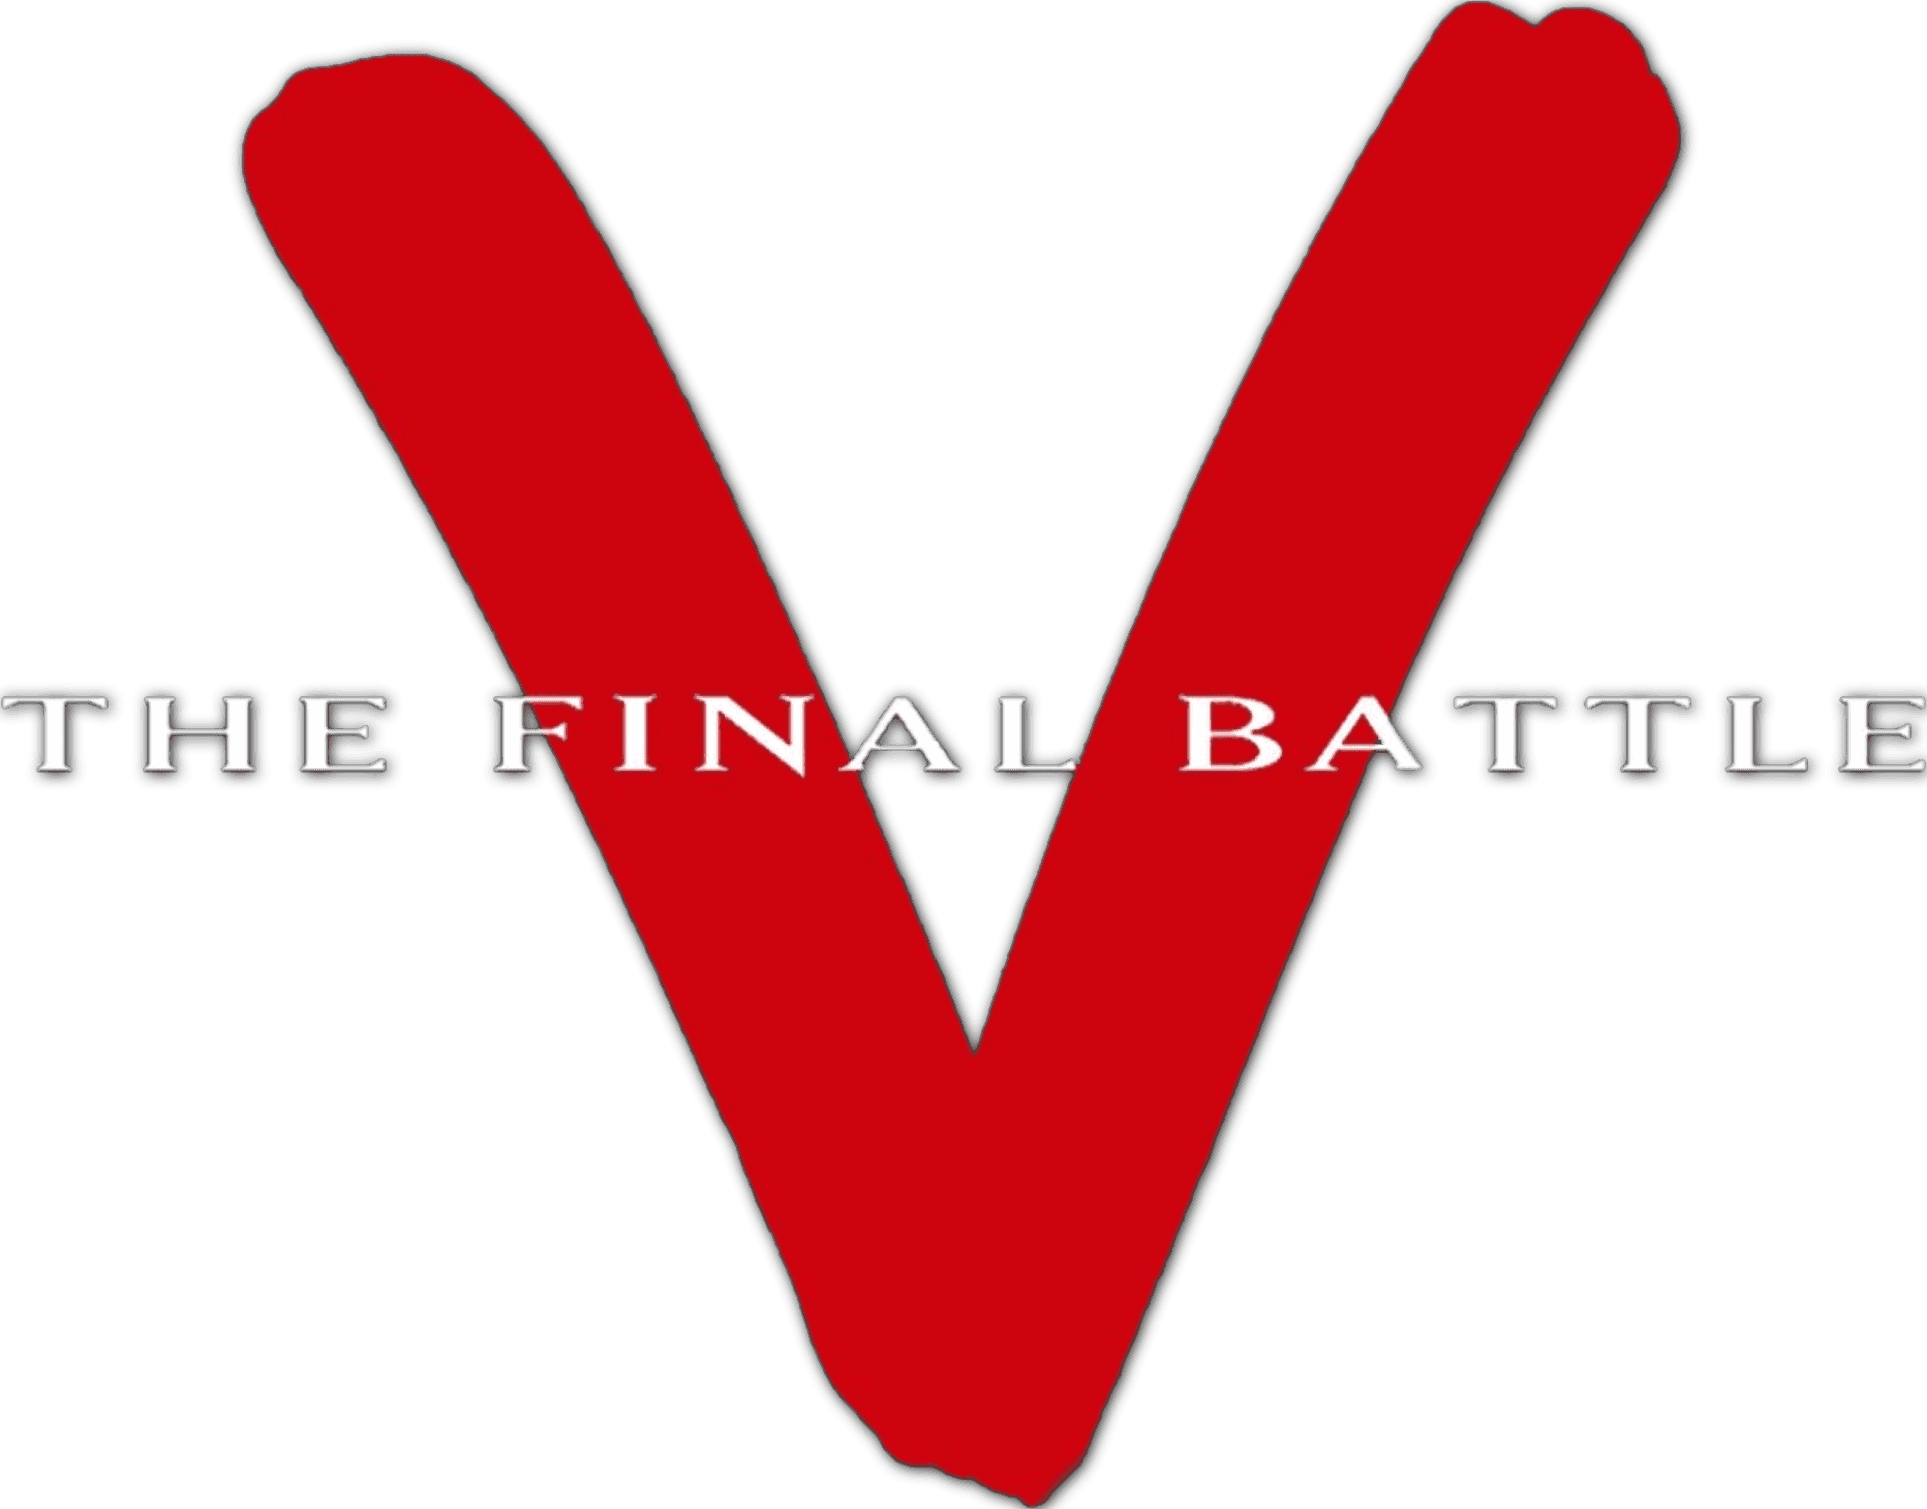 V: The Final Battle logo